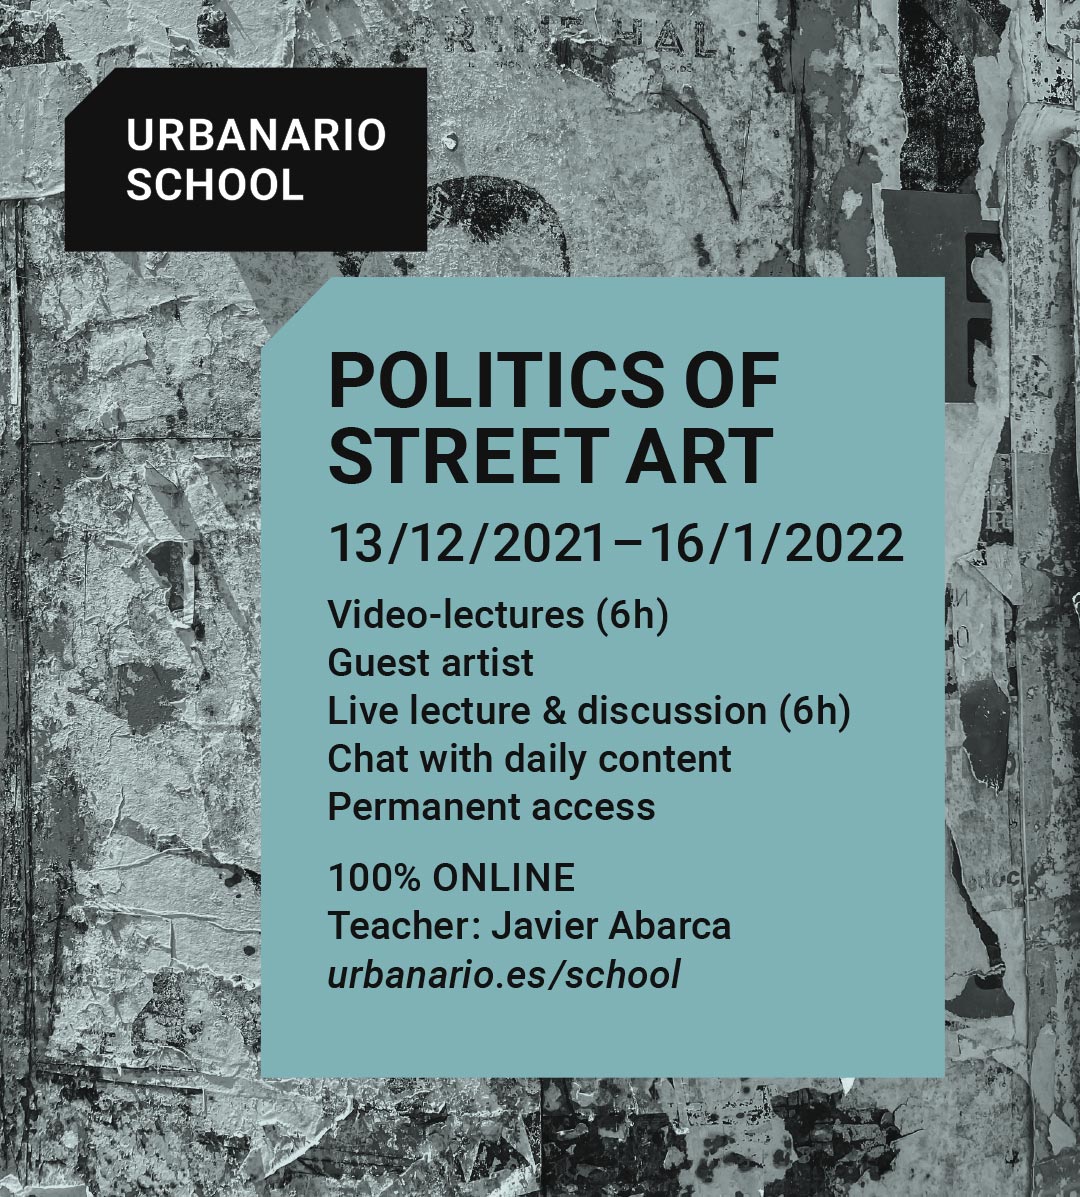 Politics of street art - Urbanario School